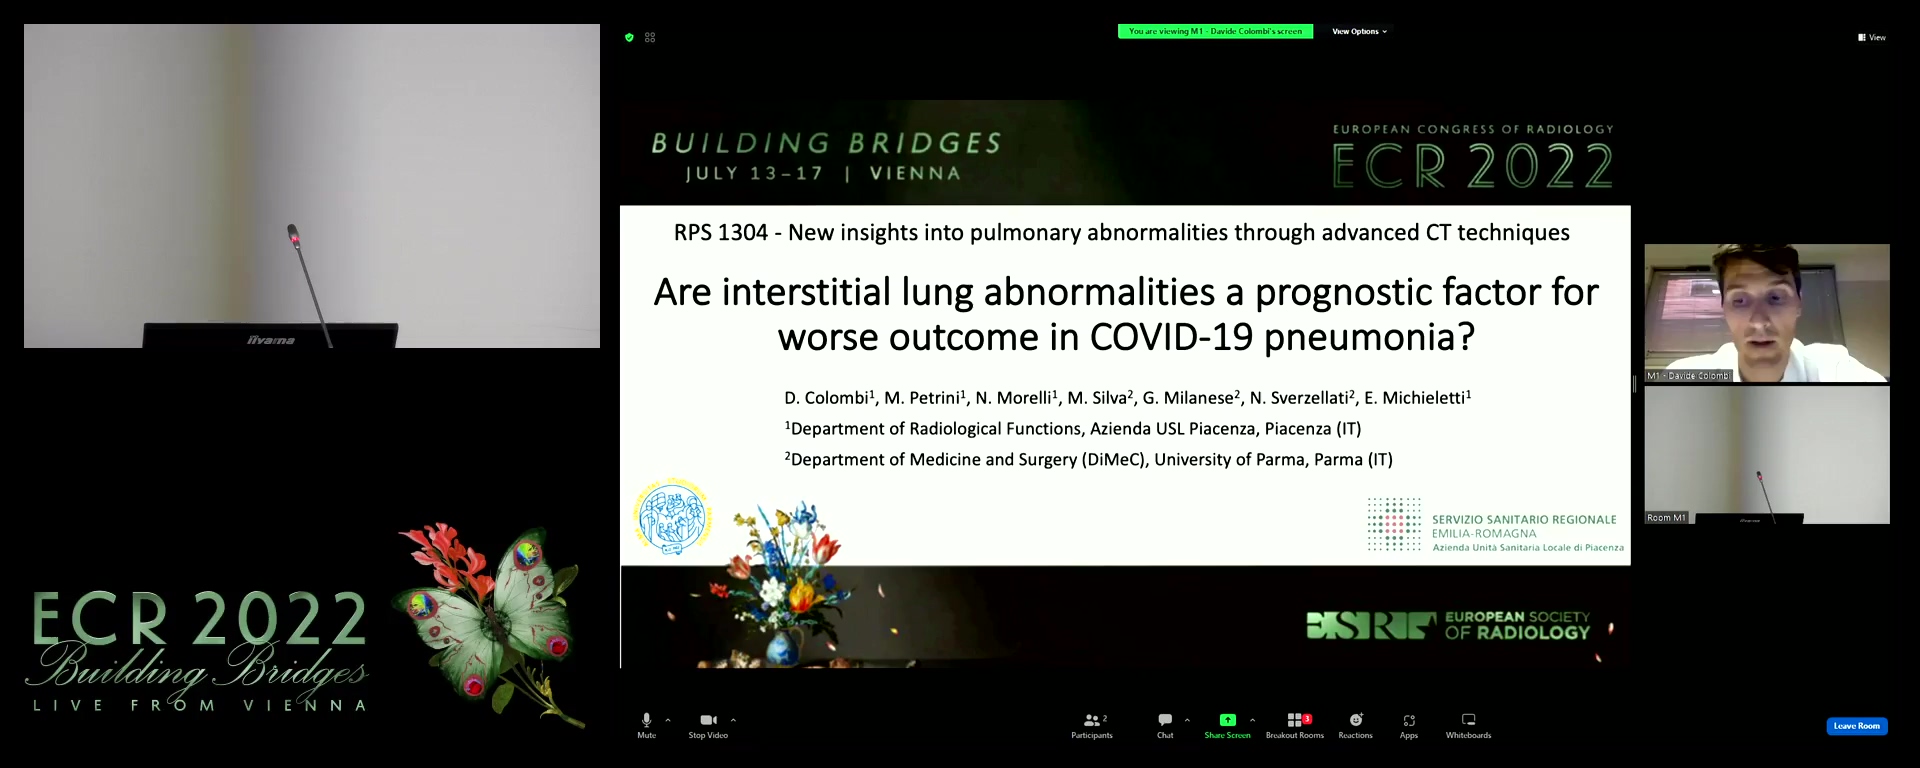 Are interstitial lung abnormalities a prognostic factor for worse outcomes in COVID-19 pneumonia? - Davide Colombi, Piacenza / IT